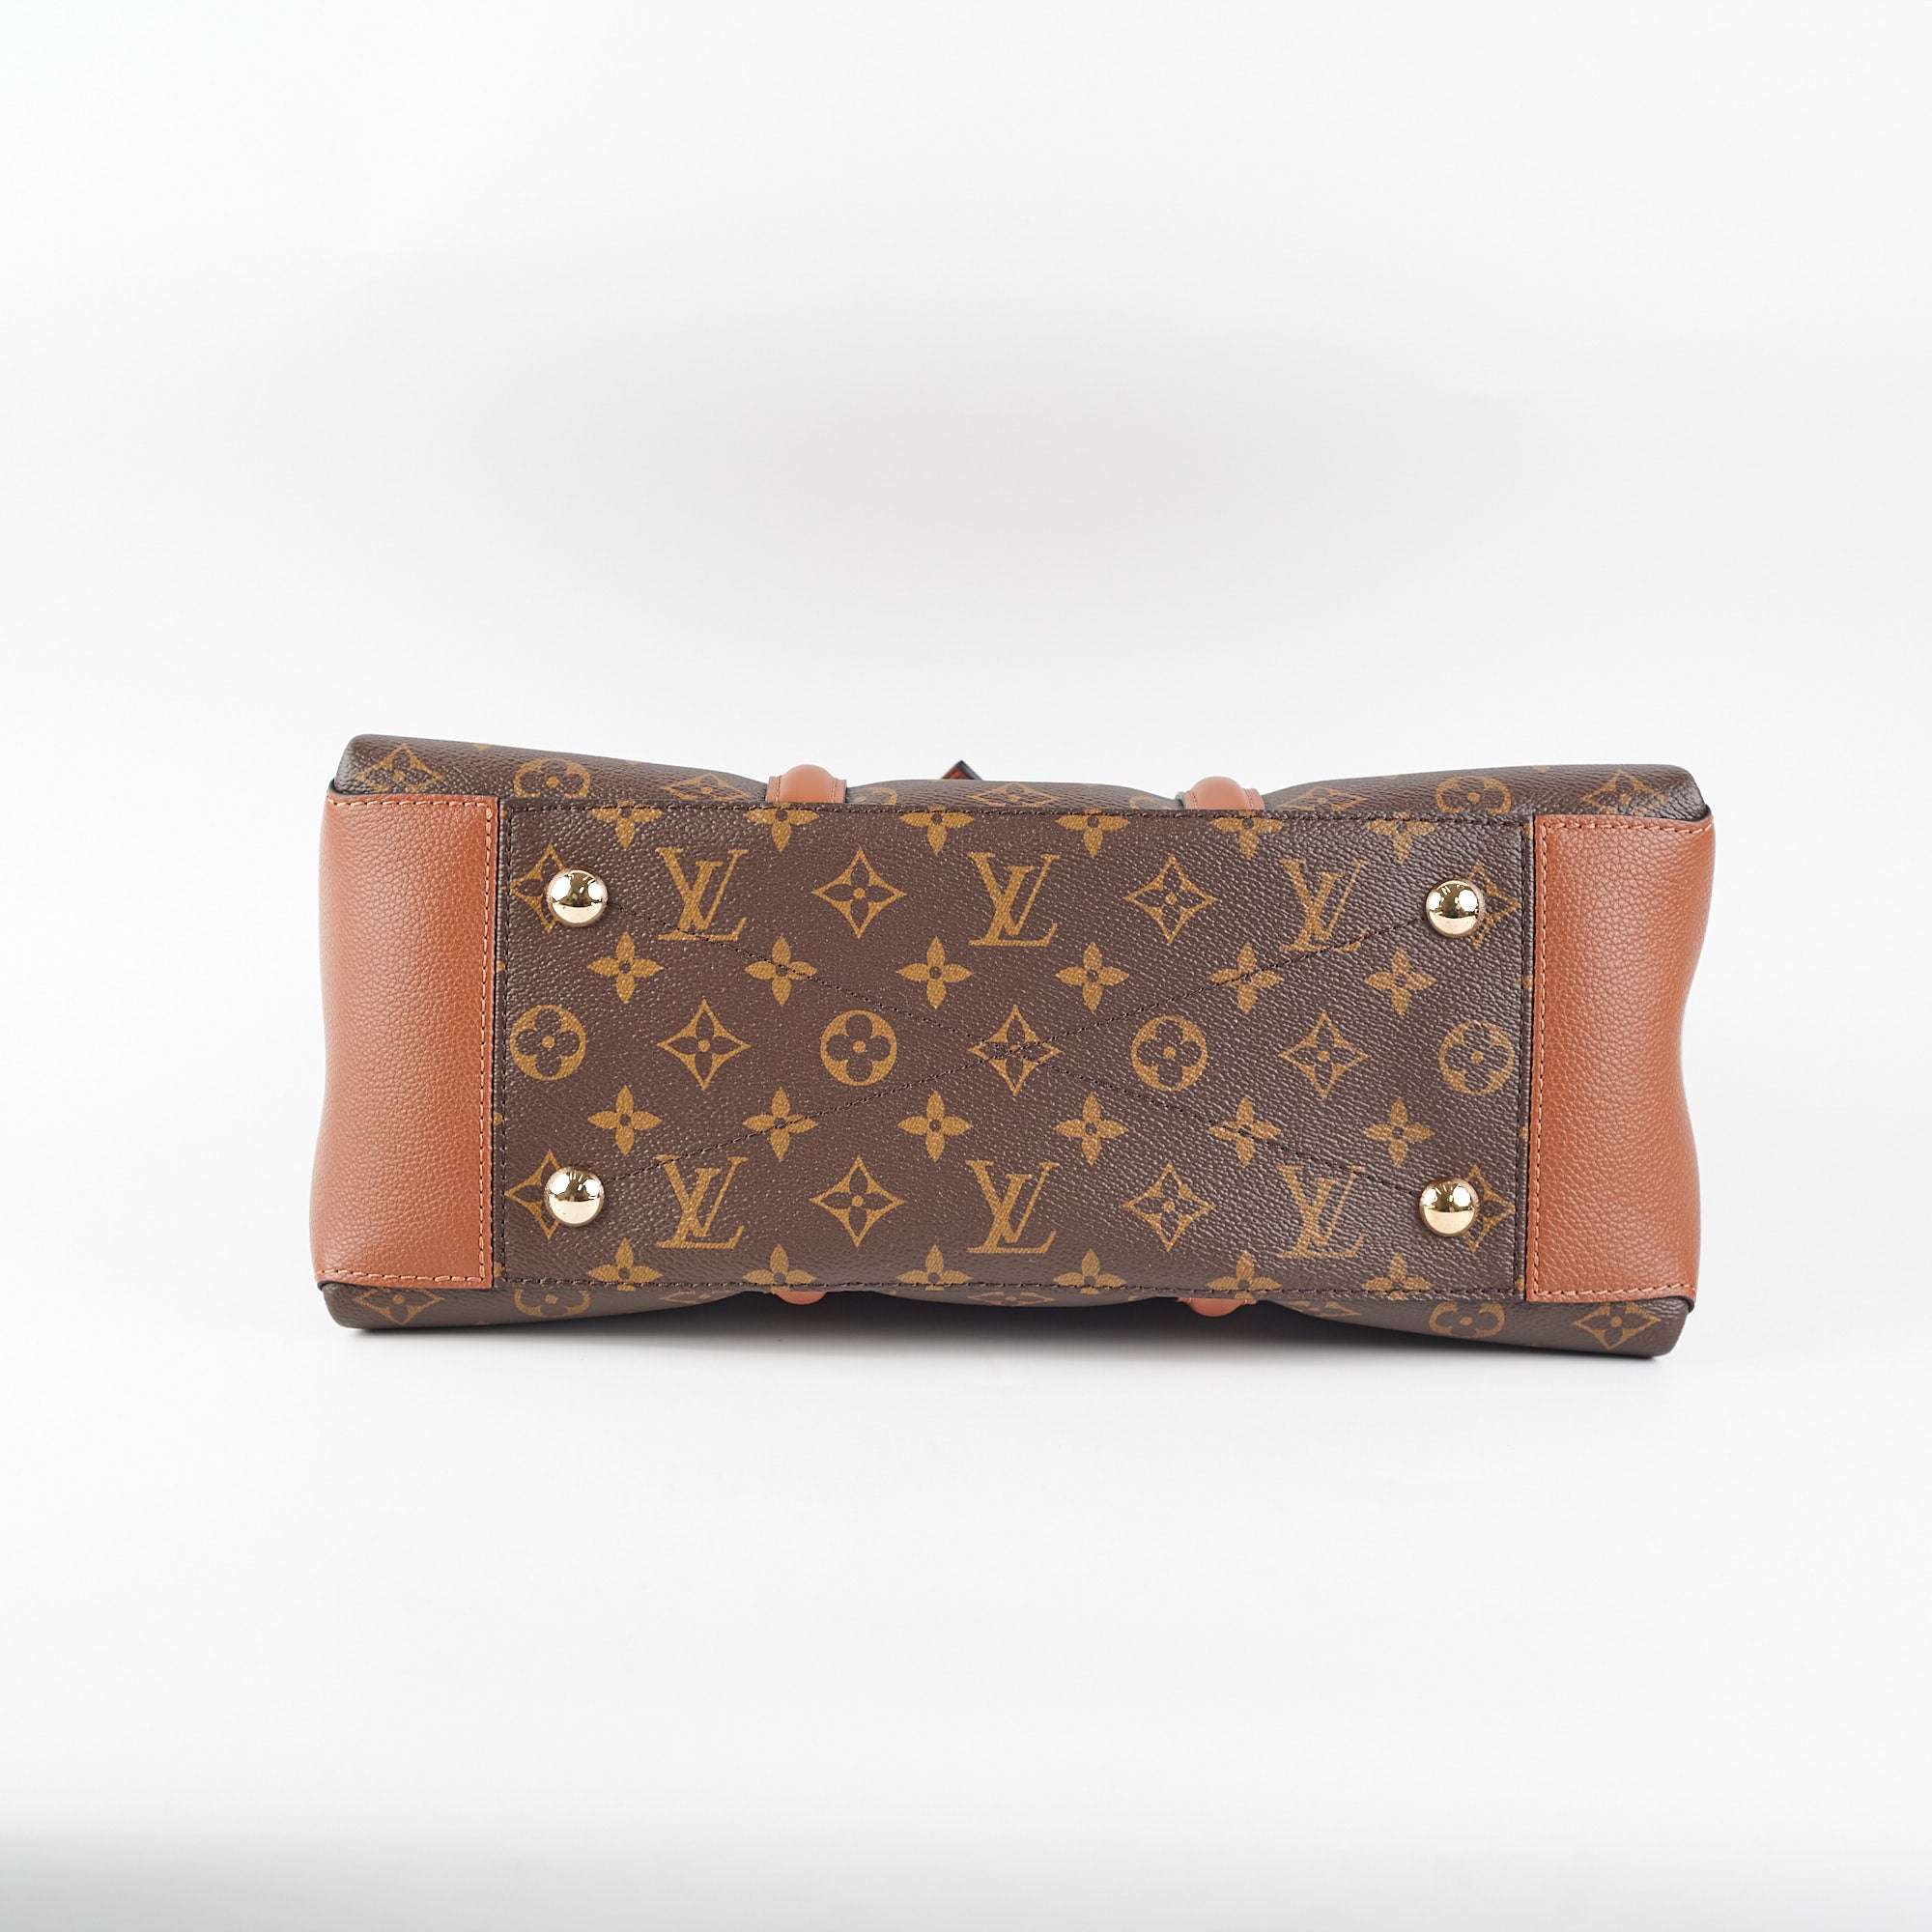 Louis Vuitton Soufflot Monogram Bag